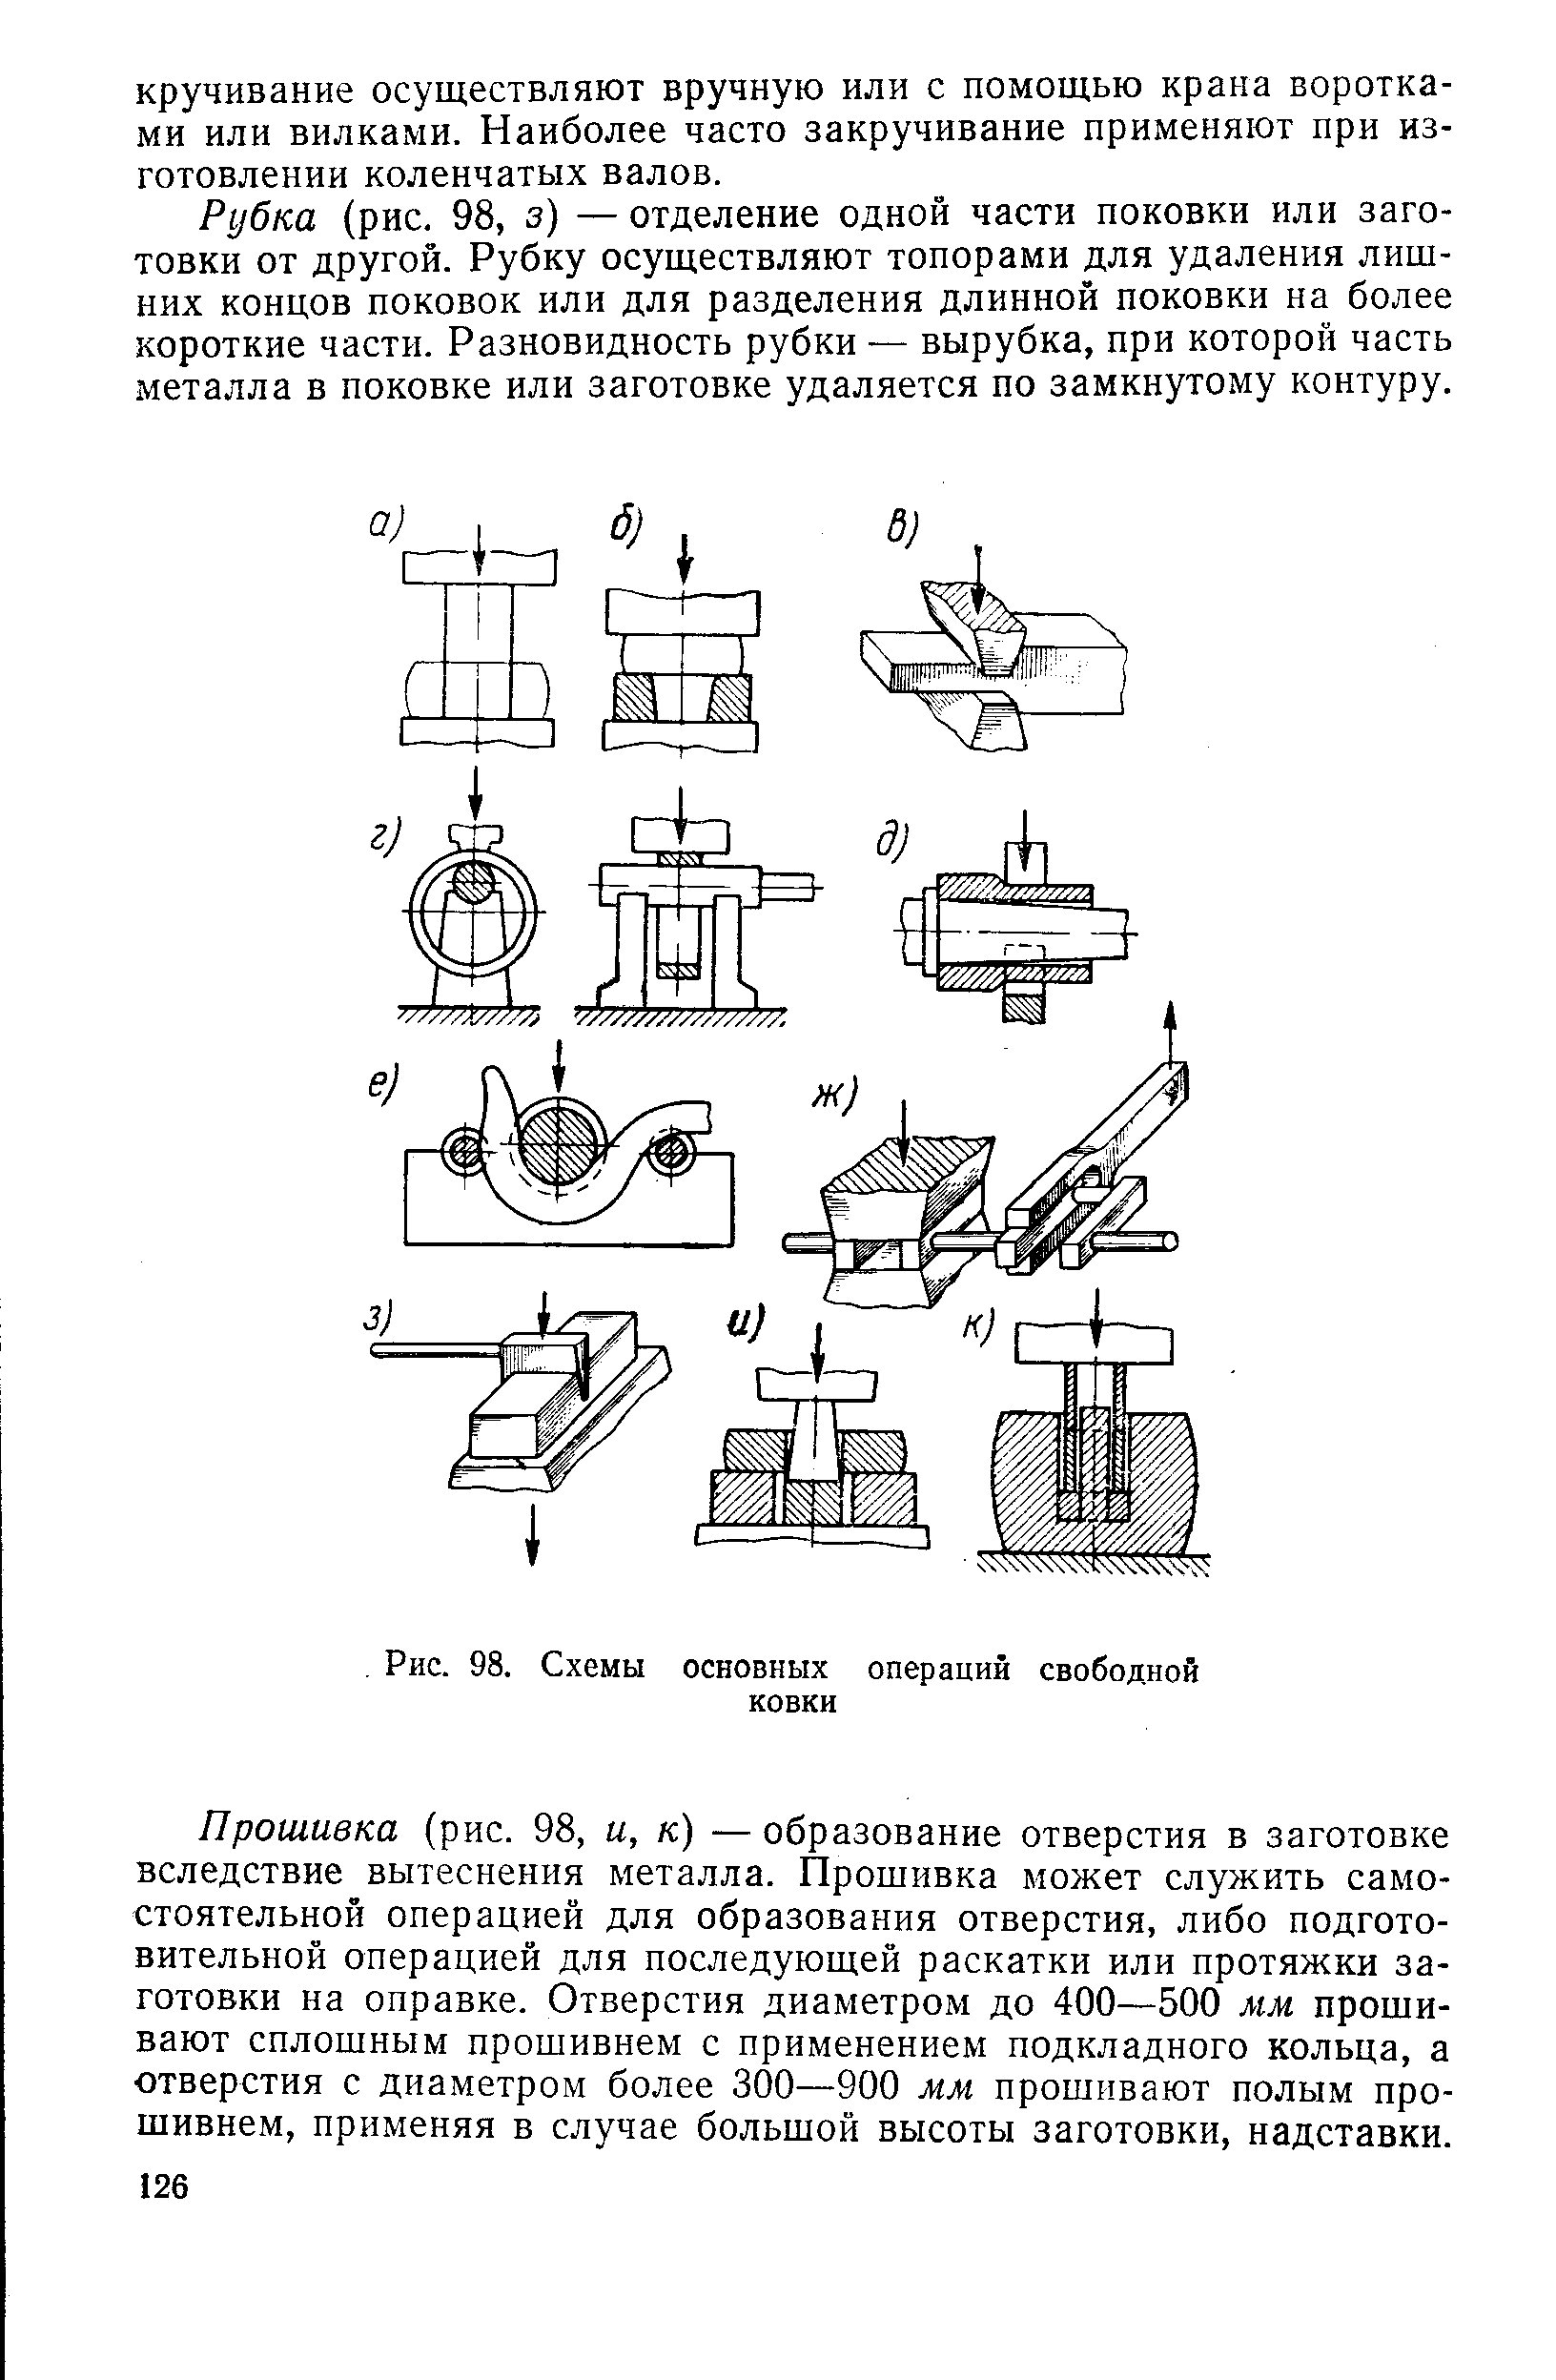 Схема операции ковки